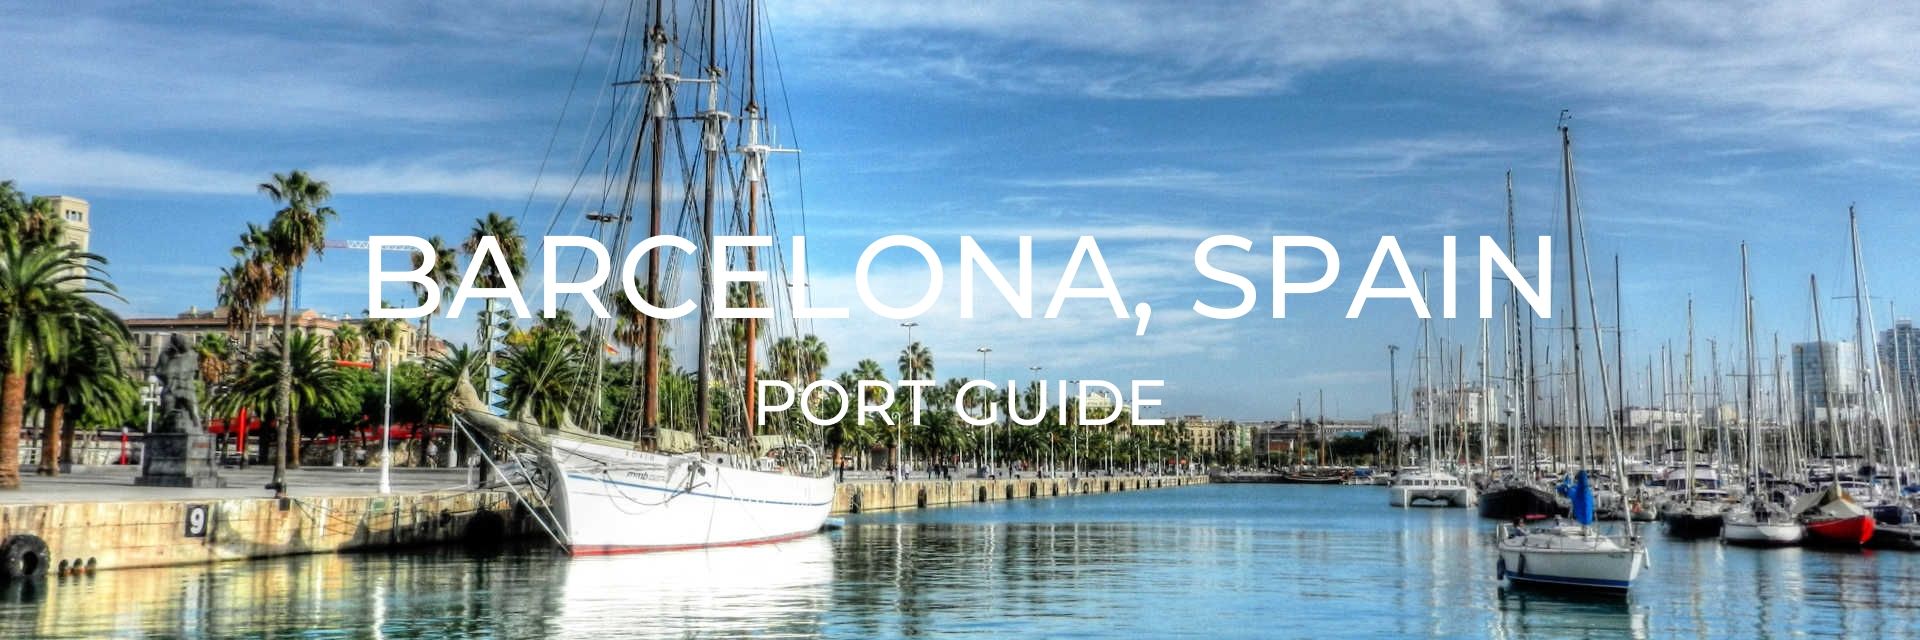 barcelona cruise port guide